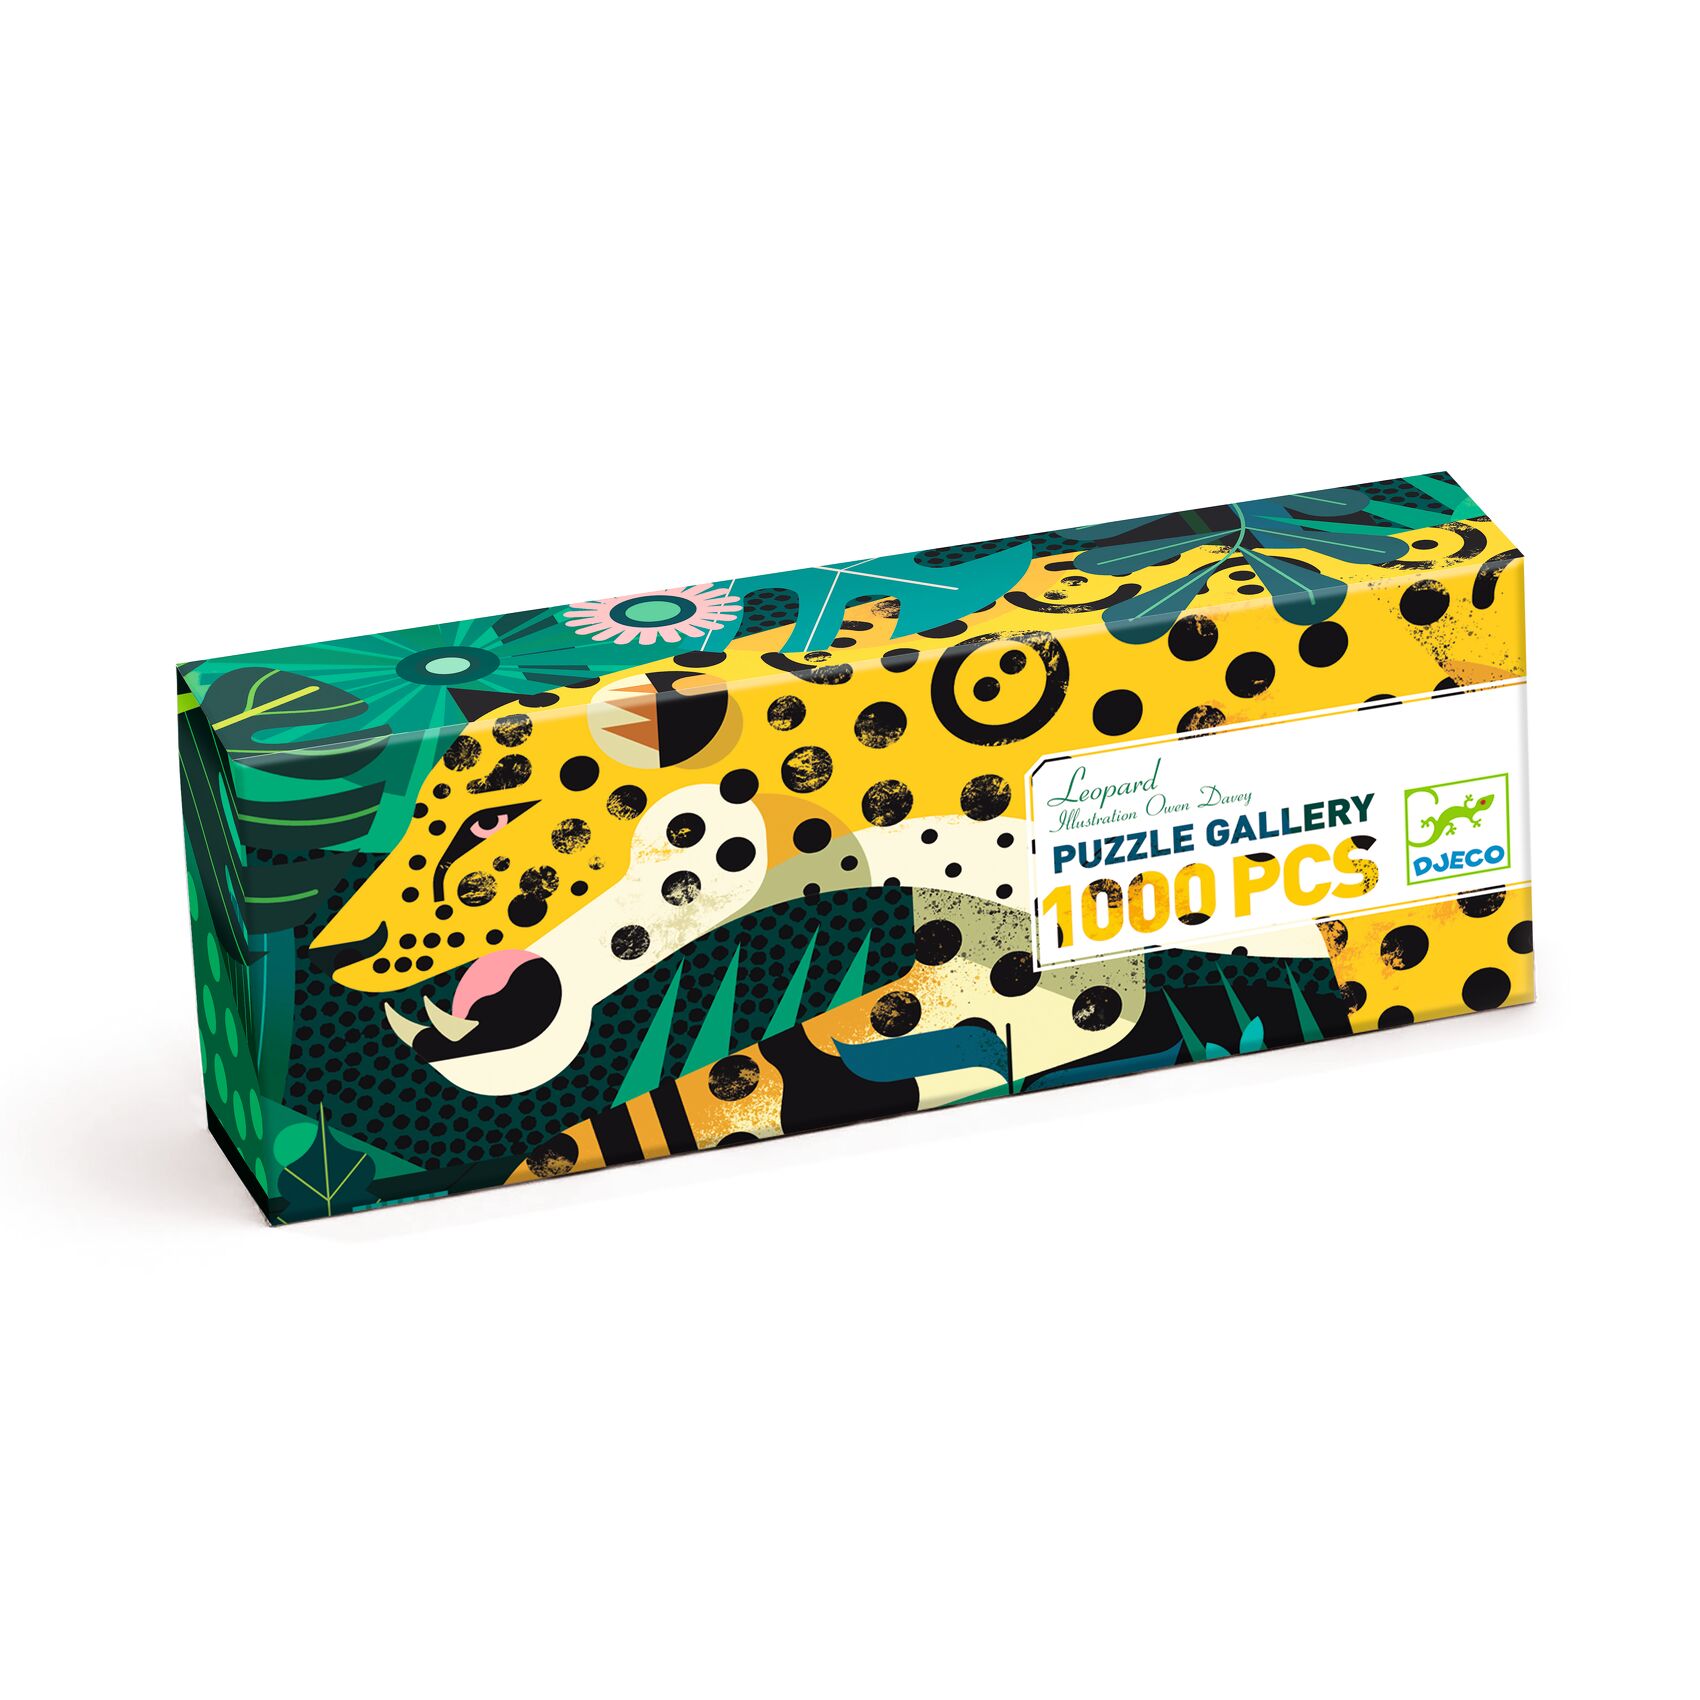 Пазл-галерея Леопард 1000 элементов  